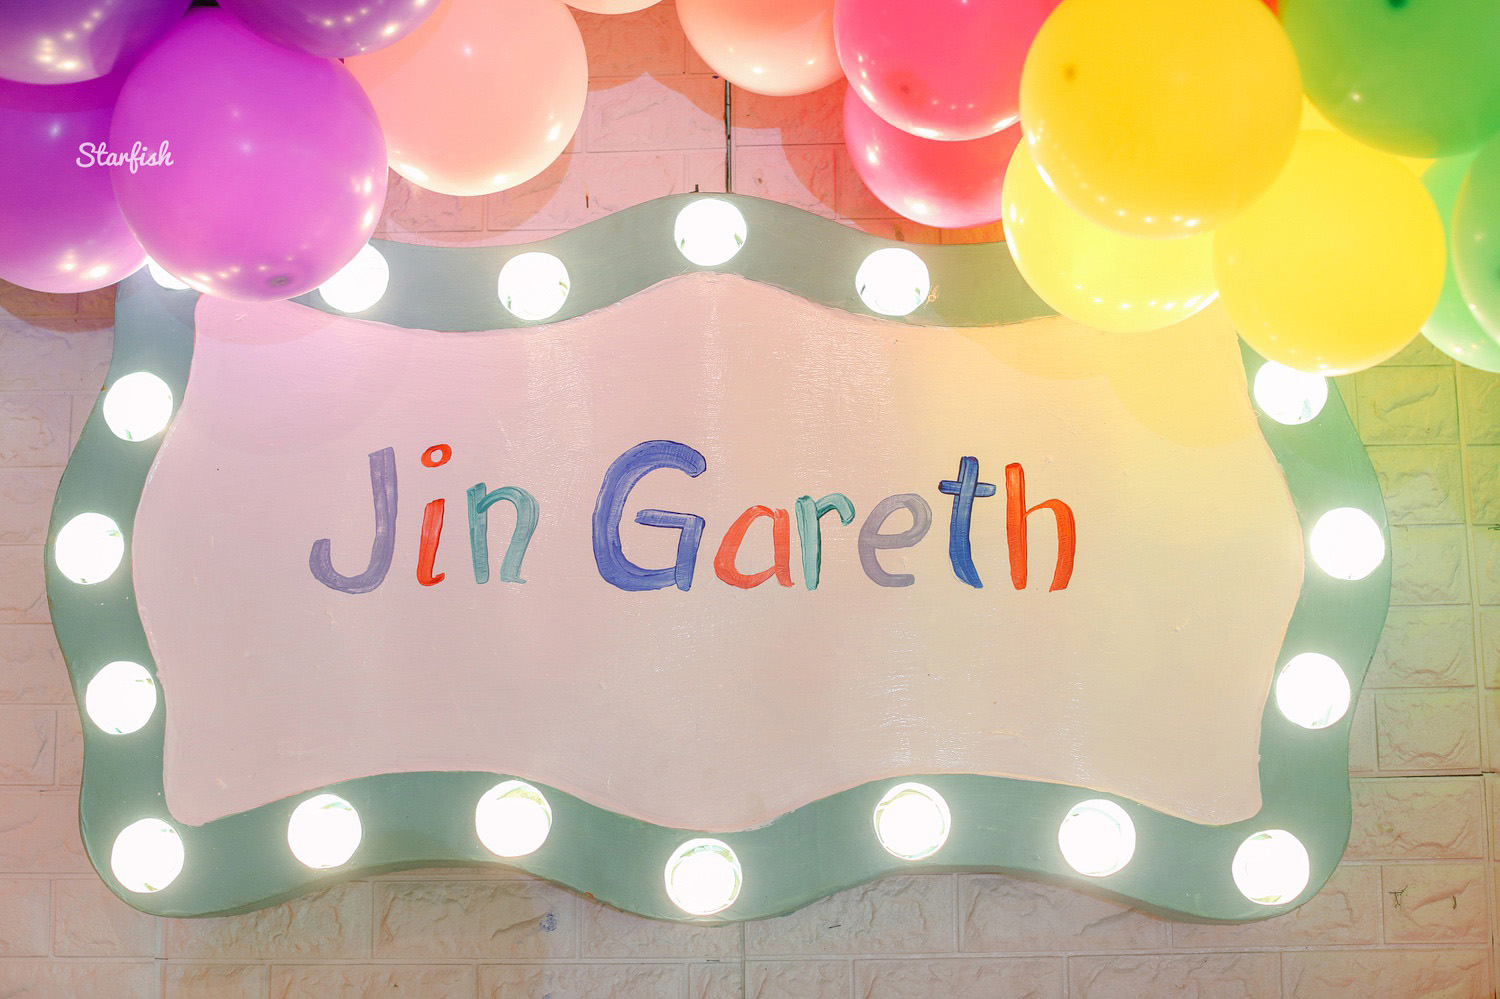 Jin Gareth's 1st Birthday